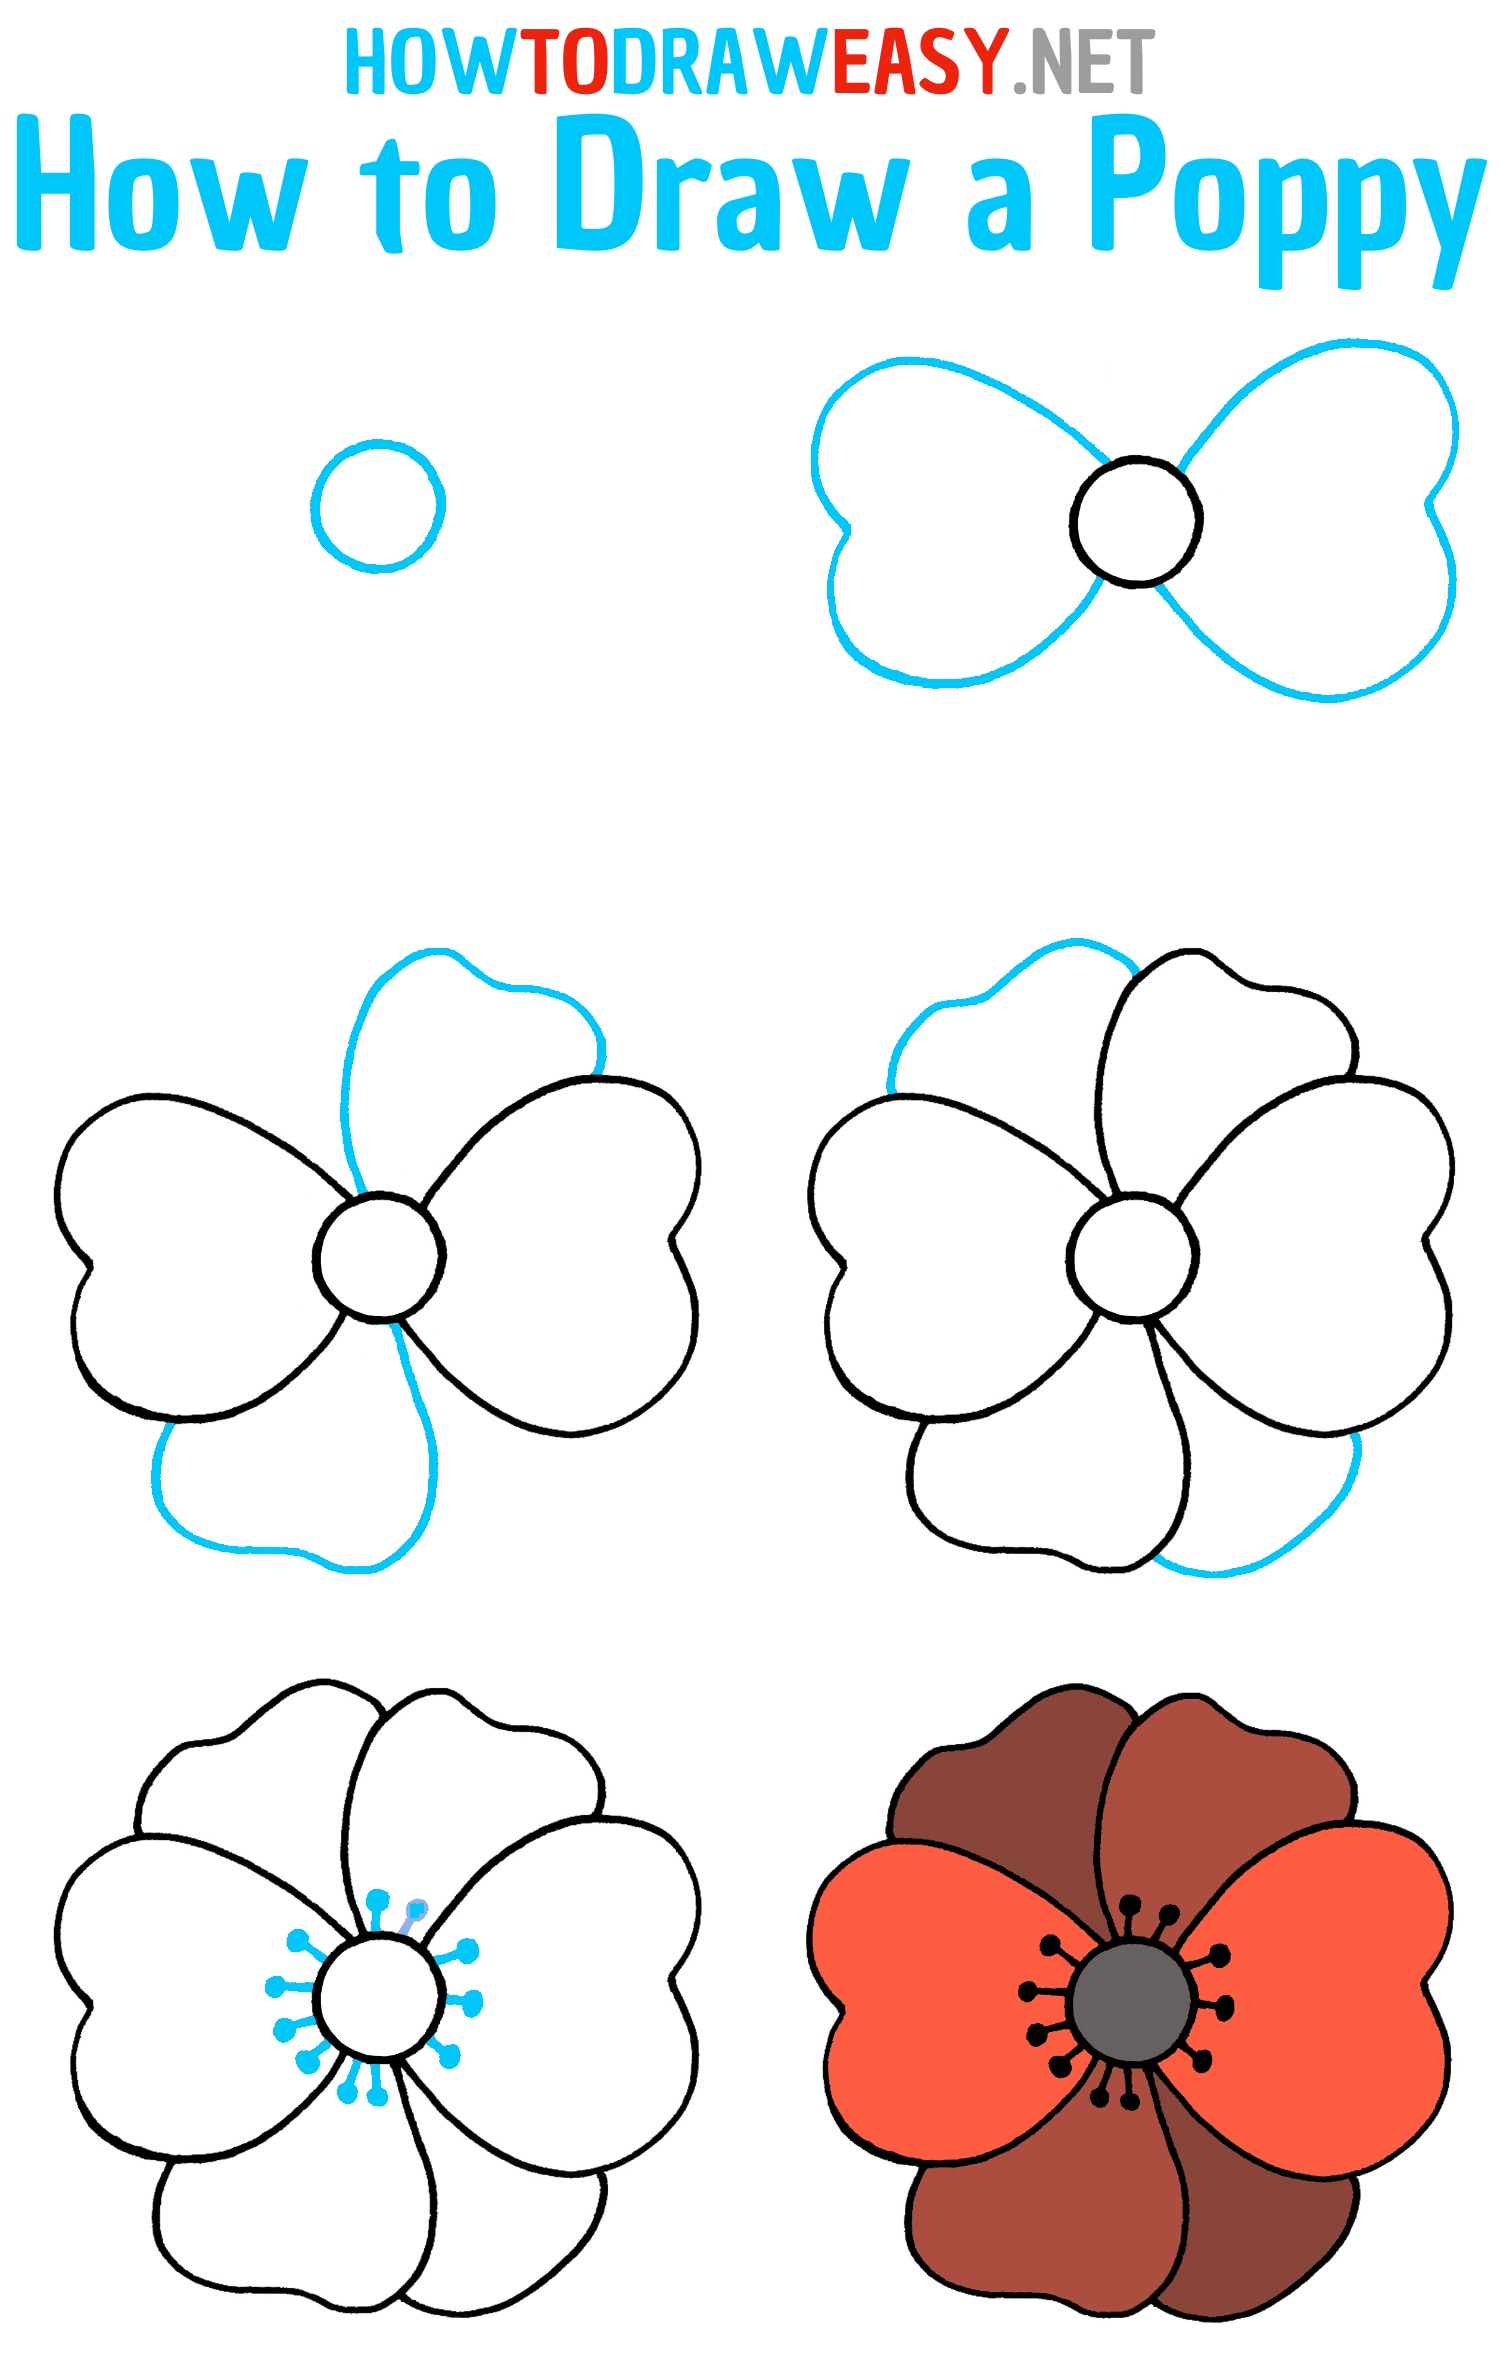 How to Draw a Poppy Step by Step